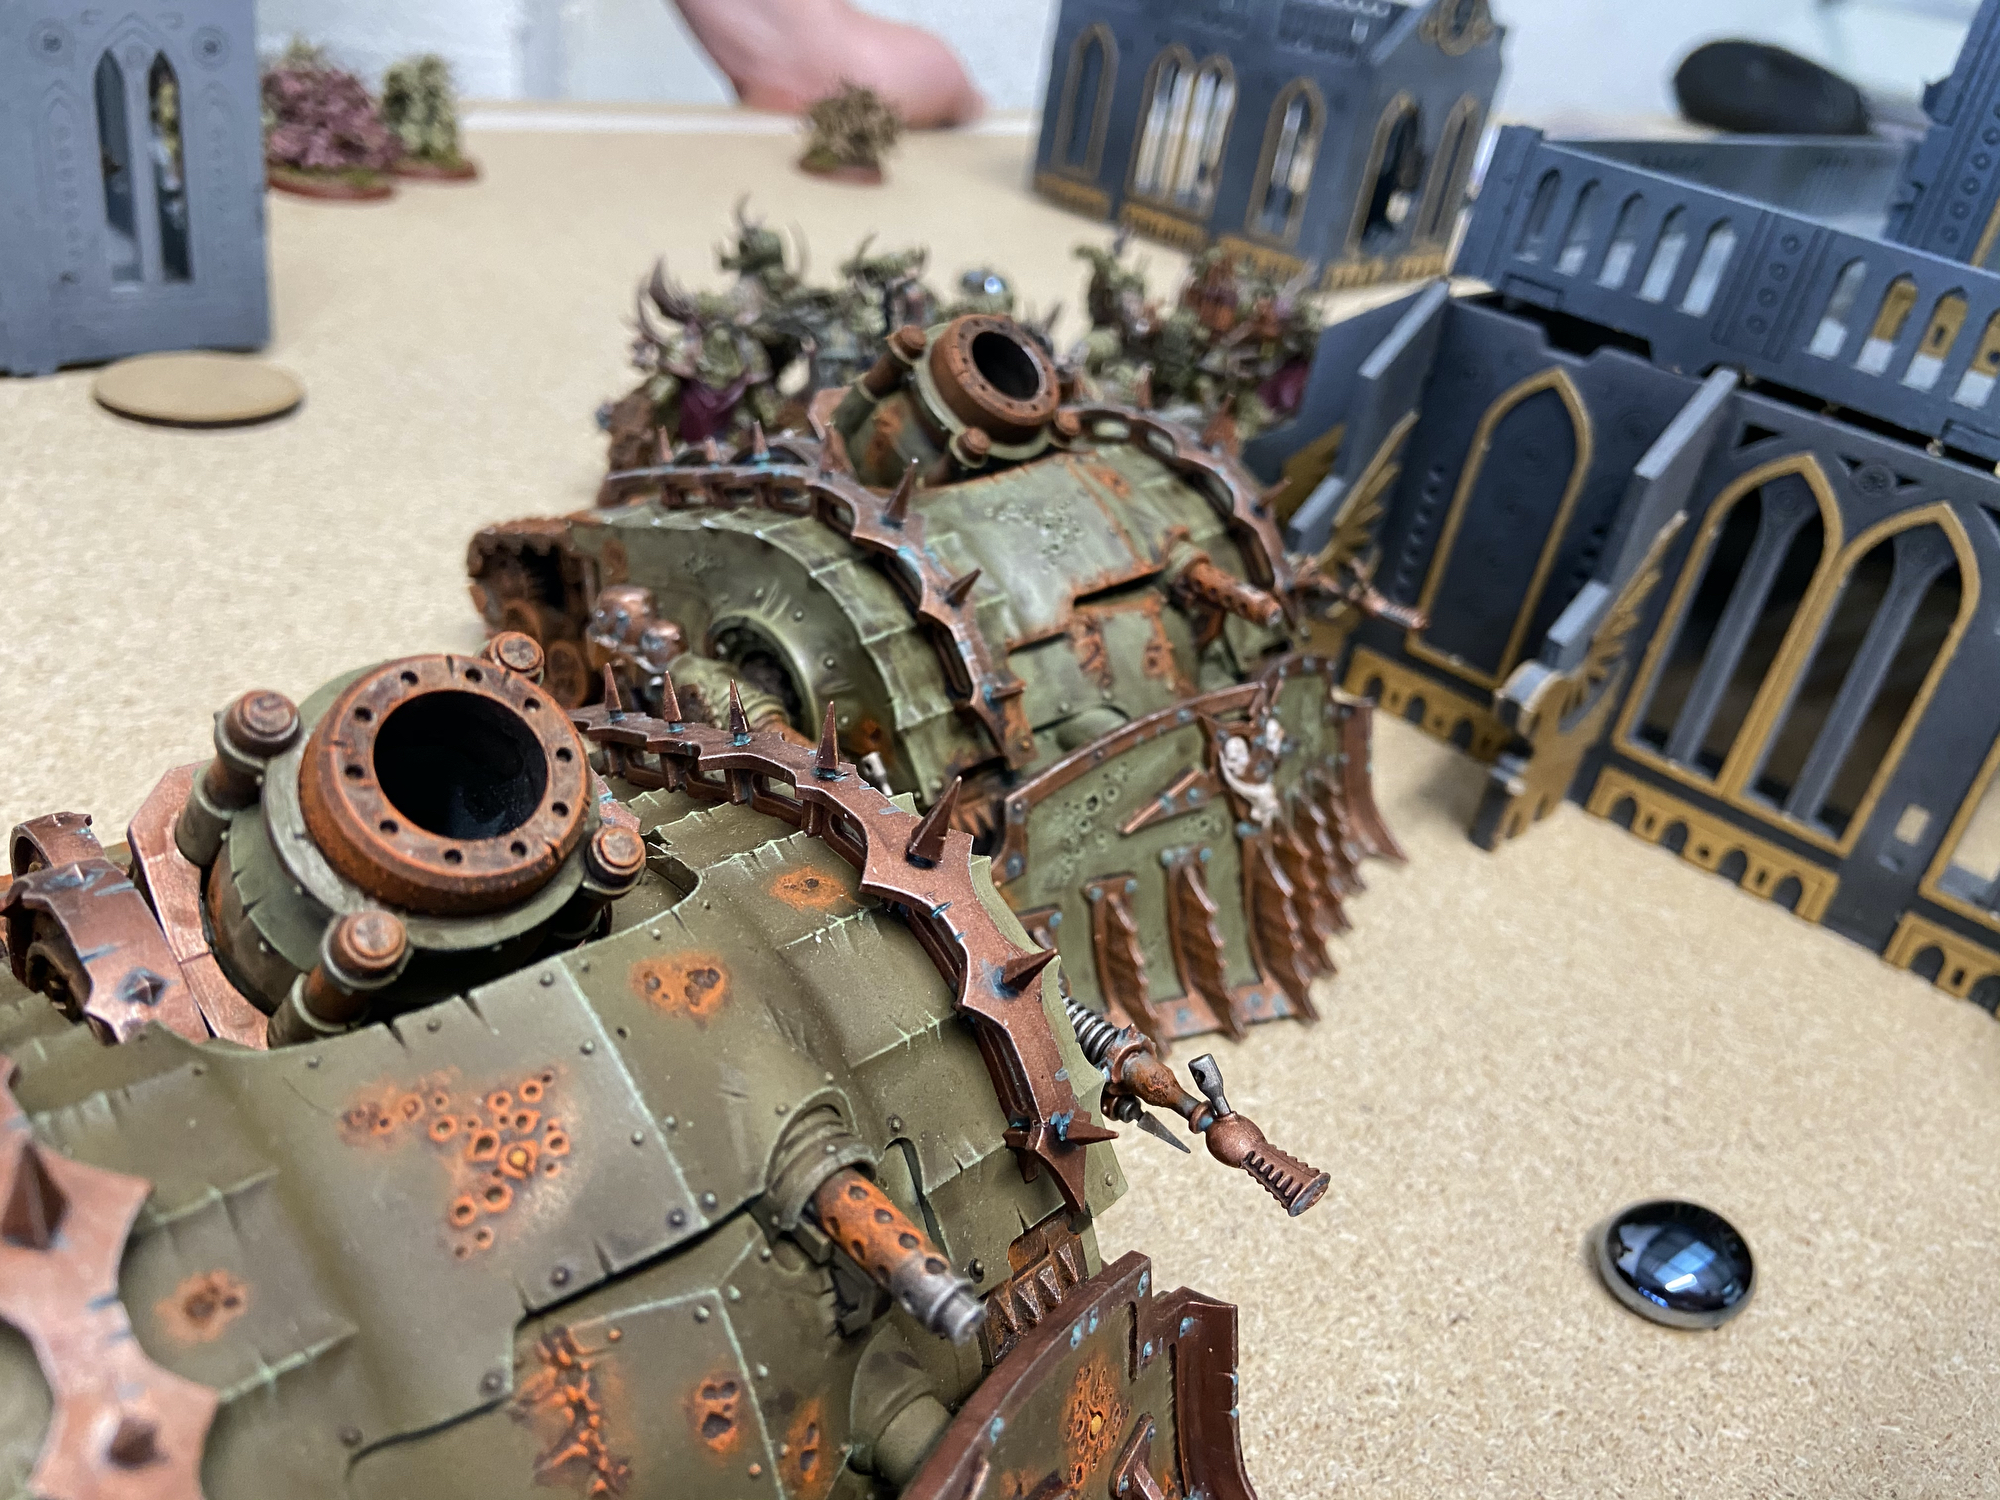 Warhammer 40K Death Guard Plagueburst Crawler Vehicle Set